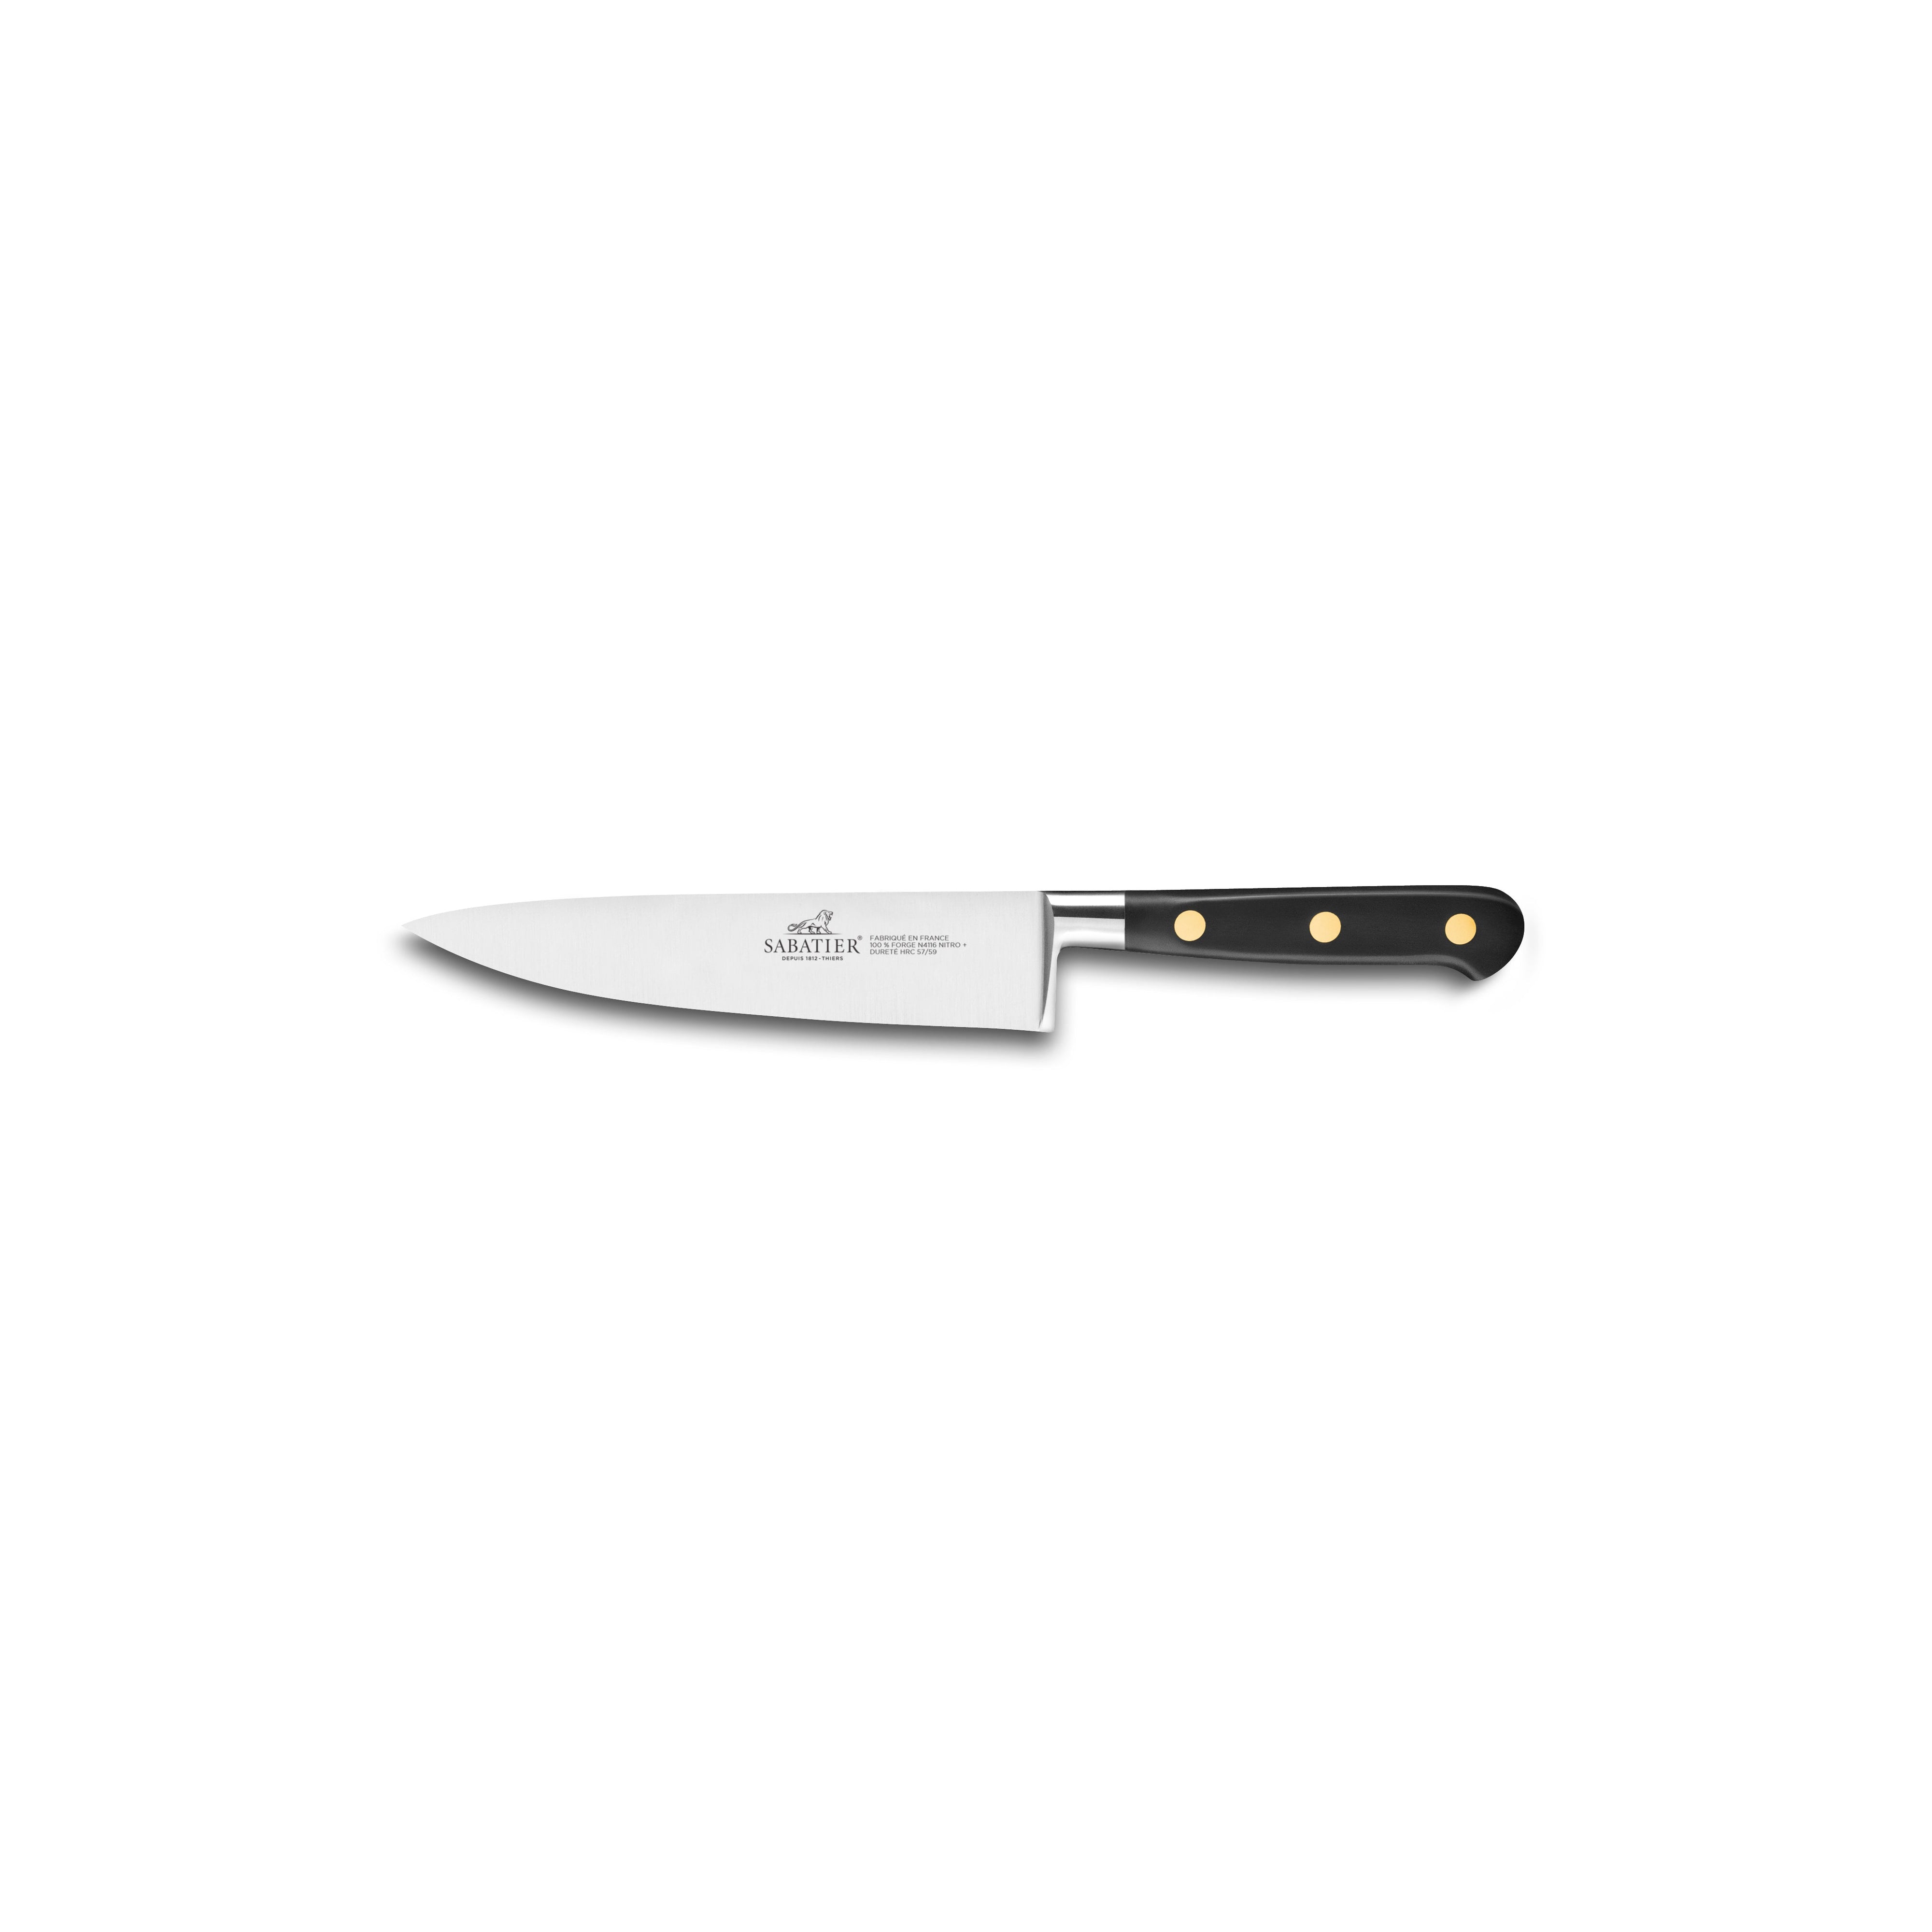 Lion Sabatier Chef Knife 15cm - Ideal Brass